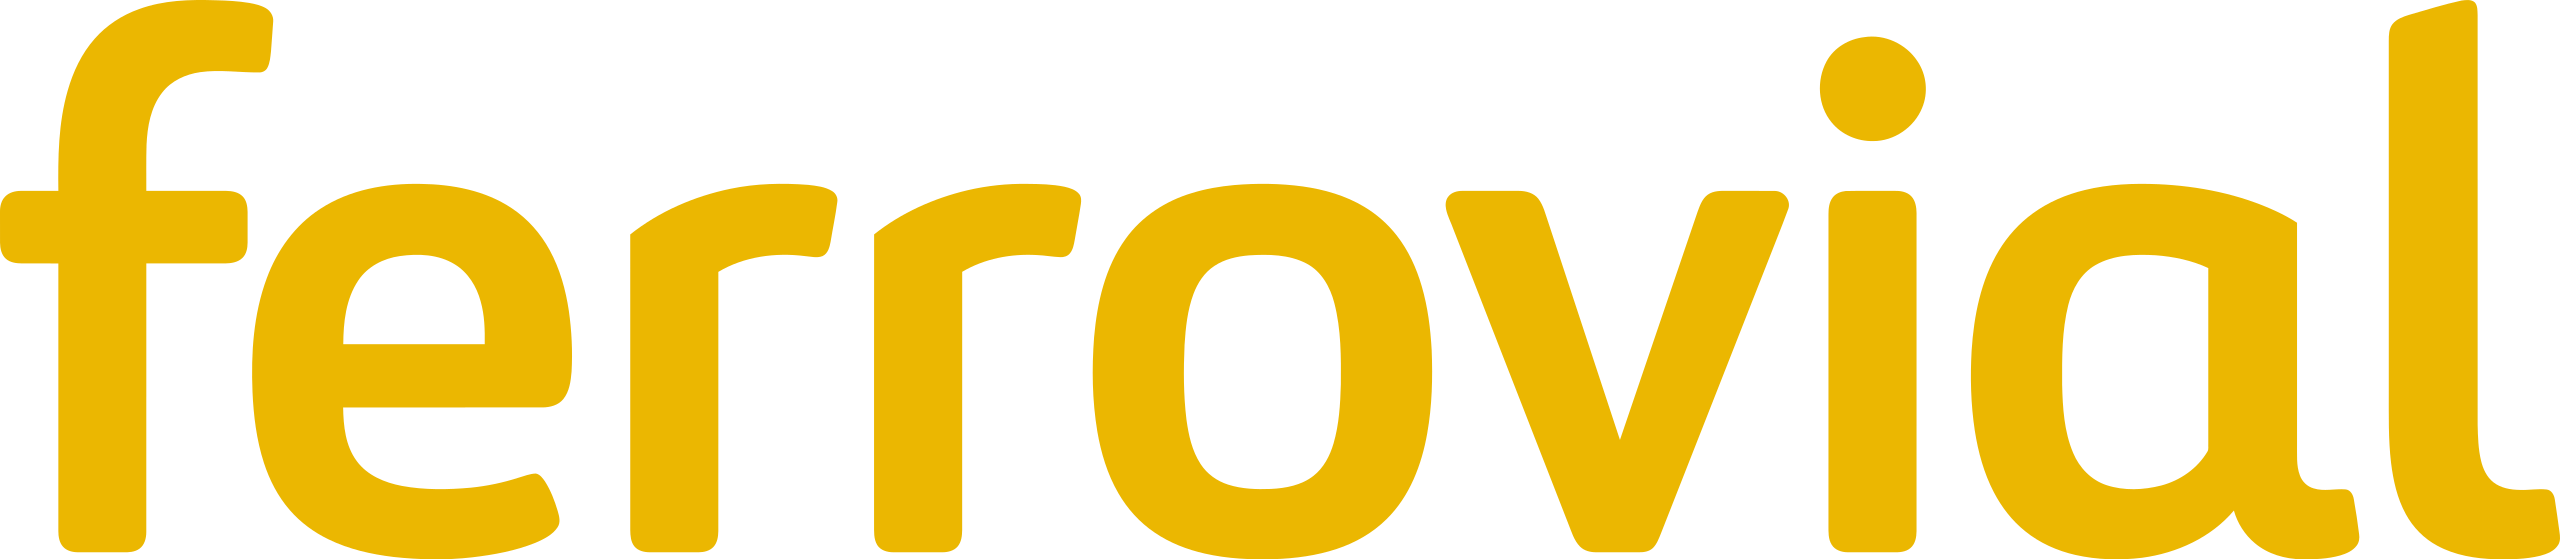 2560px Ferrovial Logo.svg